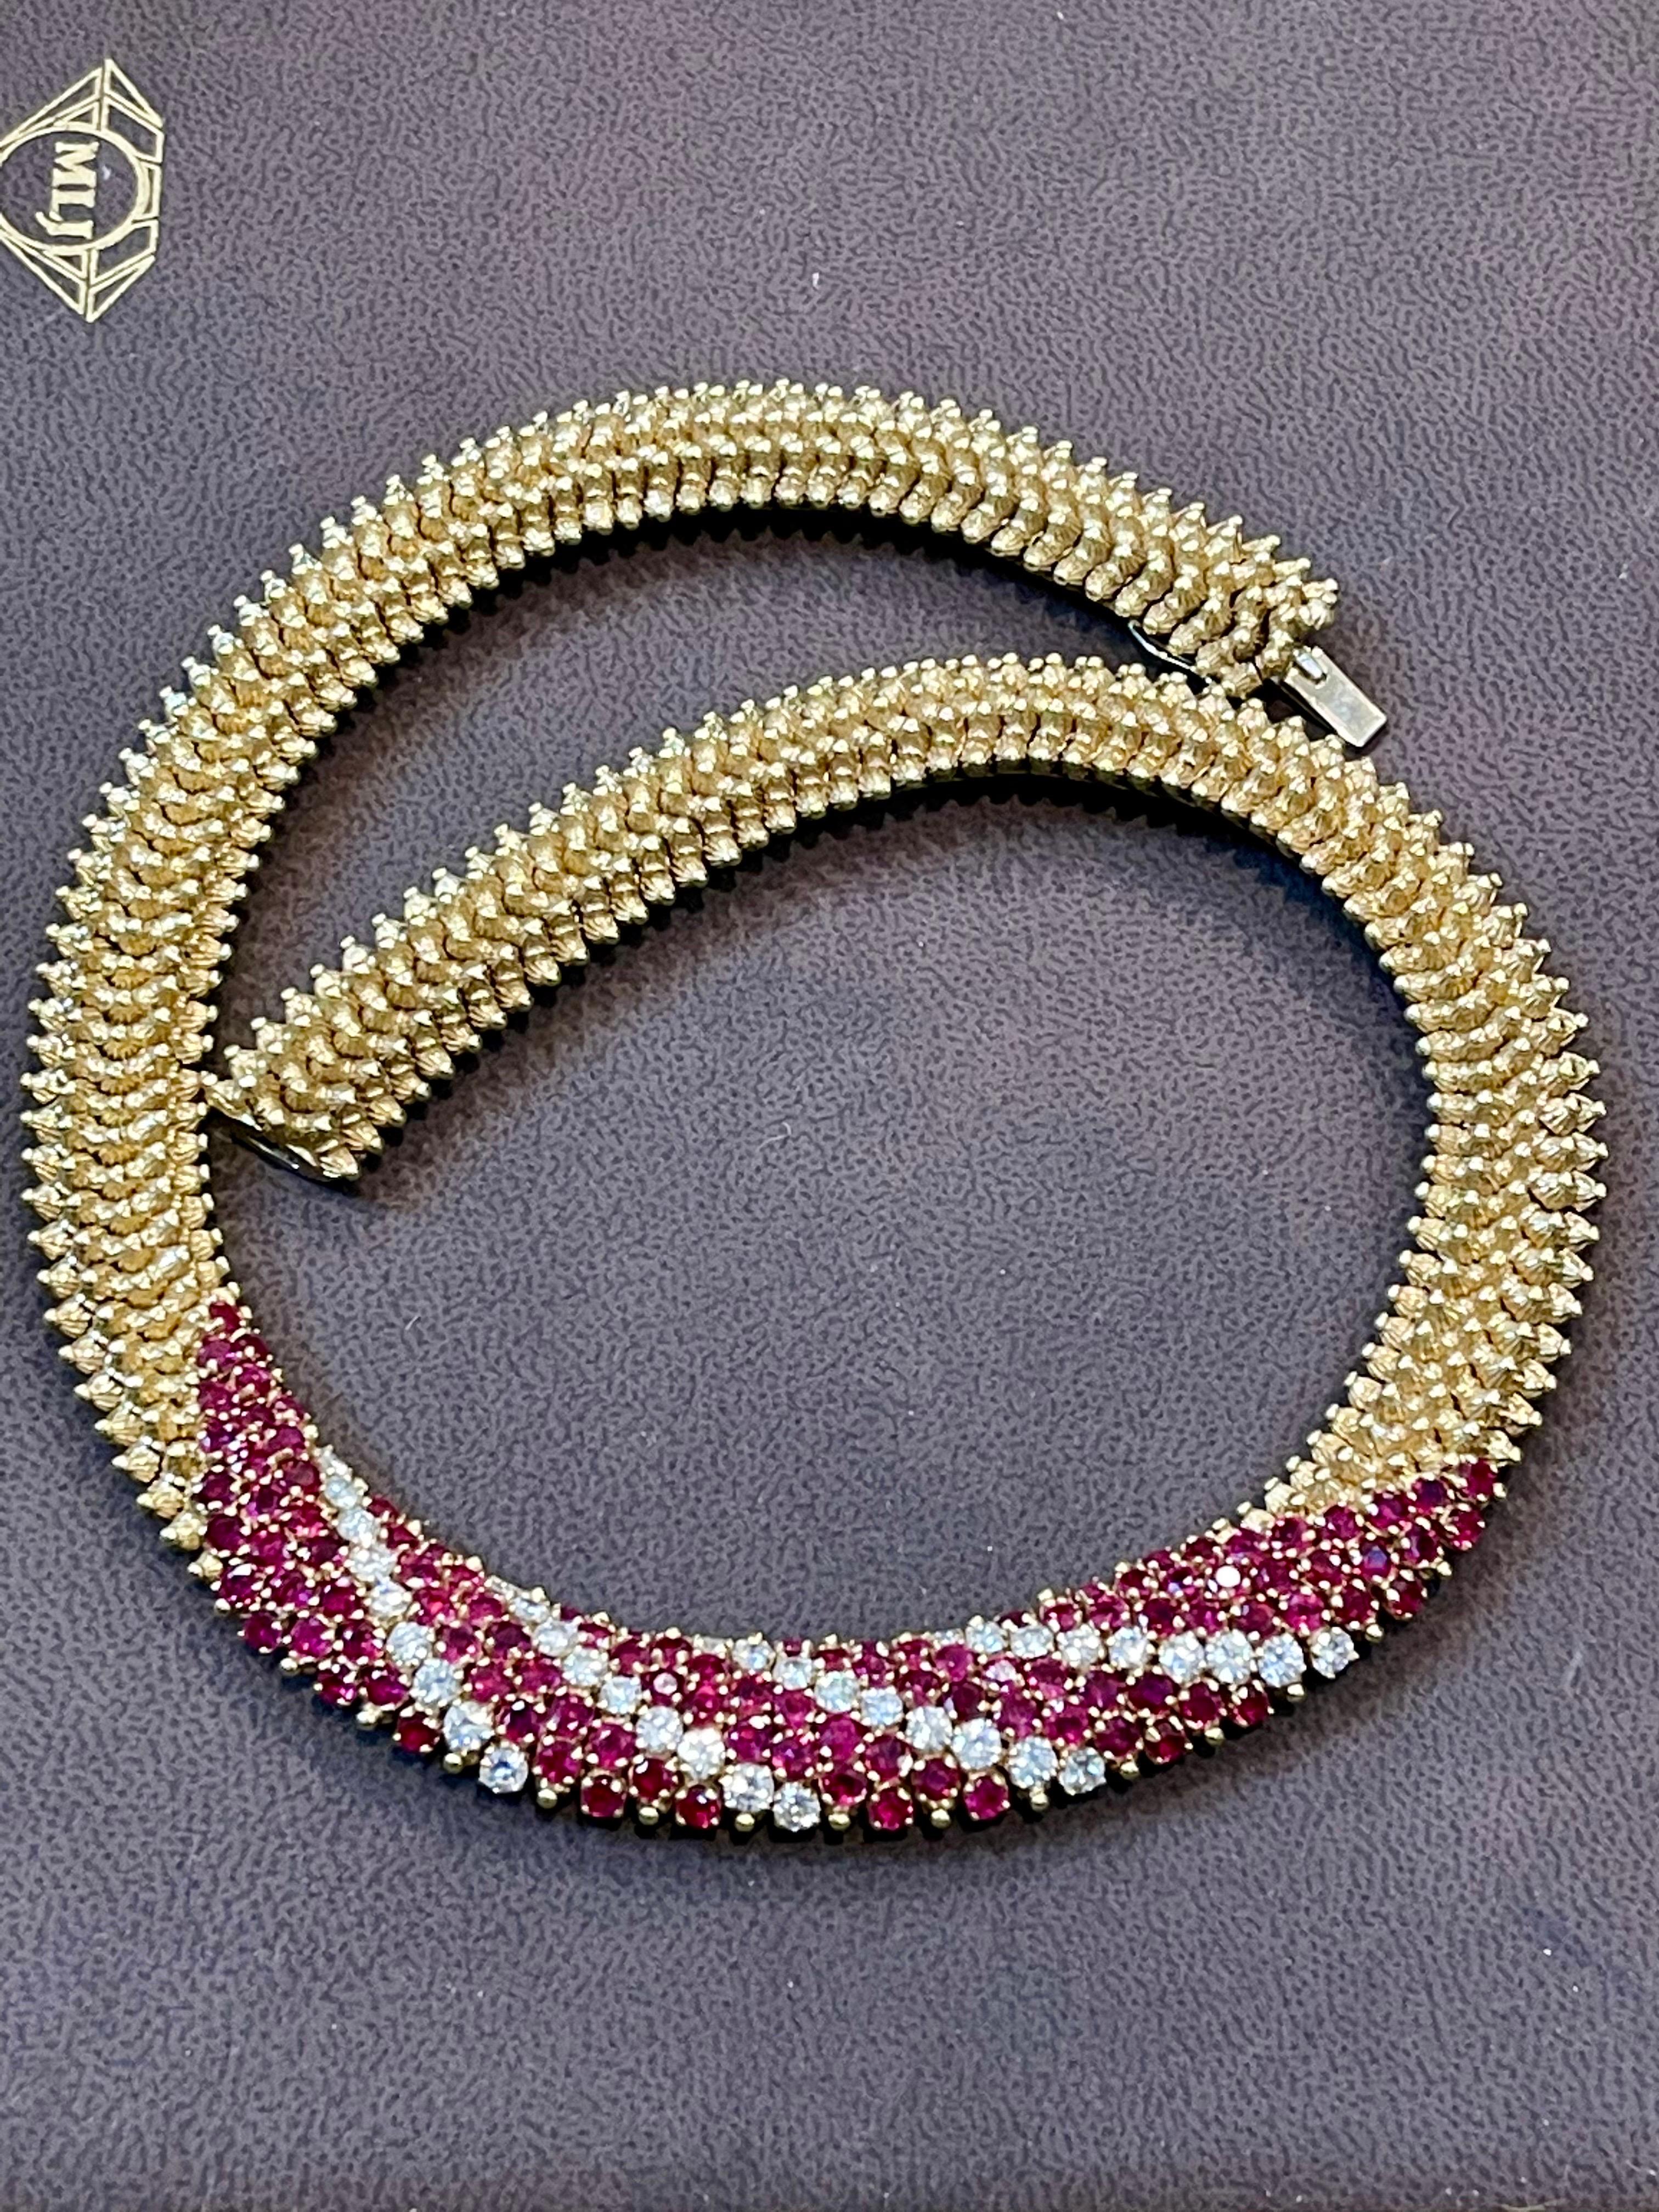 Natural 12 Ct Burma Ruby and 5 Ct Diamond Necklace 18 Karat Yellow Gold 166gm  9